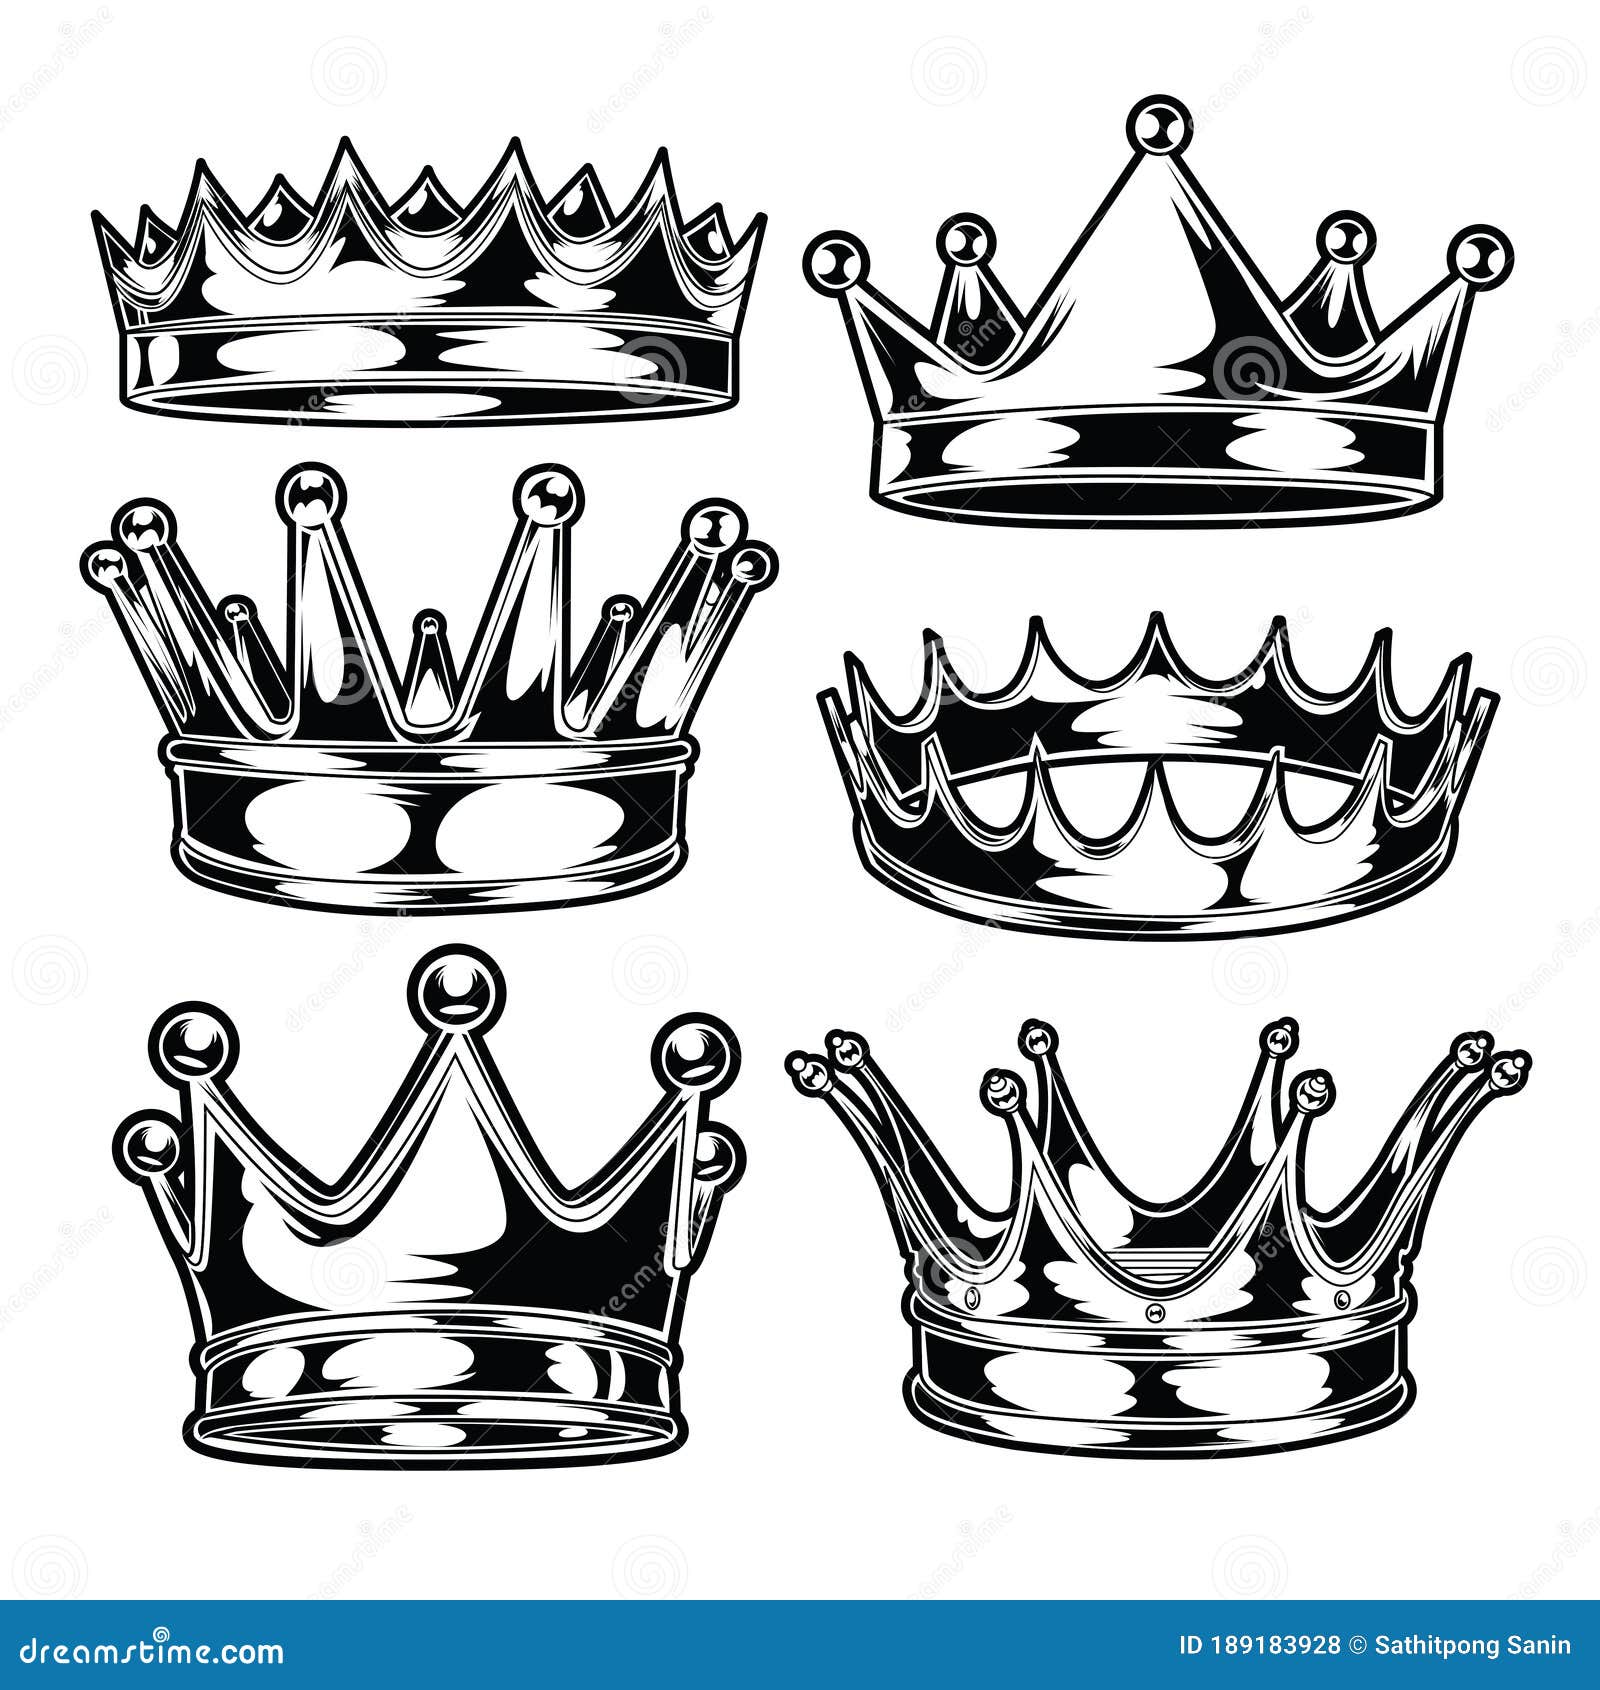 Doodle King Queen Crown Hand Drawn Logo Black Set Vector Kingdom Sketch  Concept Stock Illustration - Download Image Now - iStock